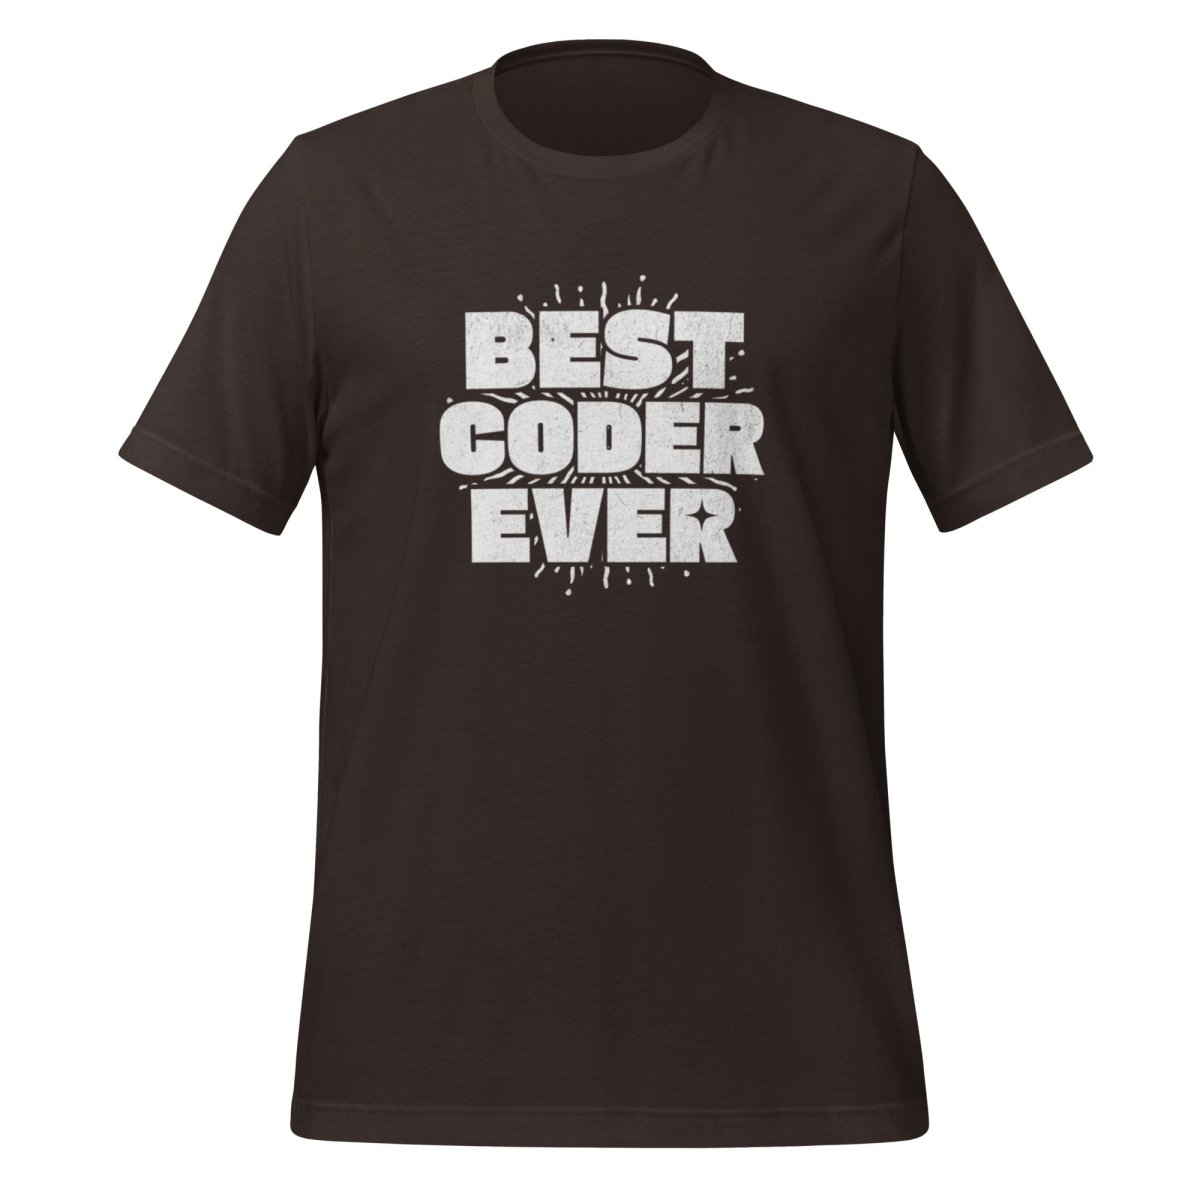 BEST CODER EVER T - Shirt (unisex) - Brown - AI Store